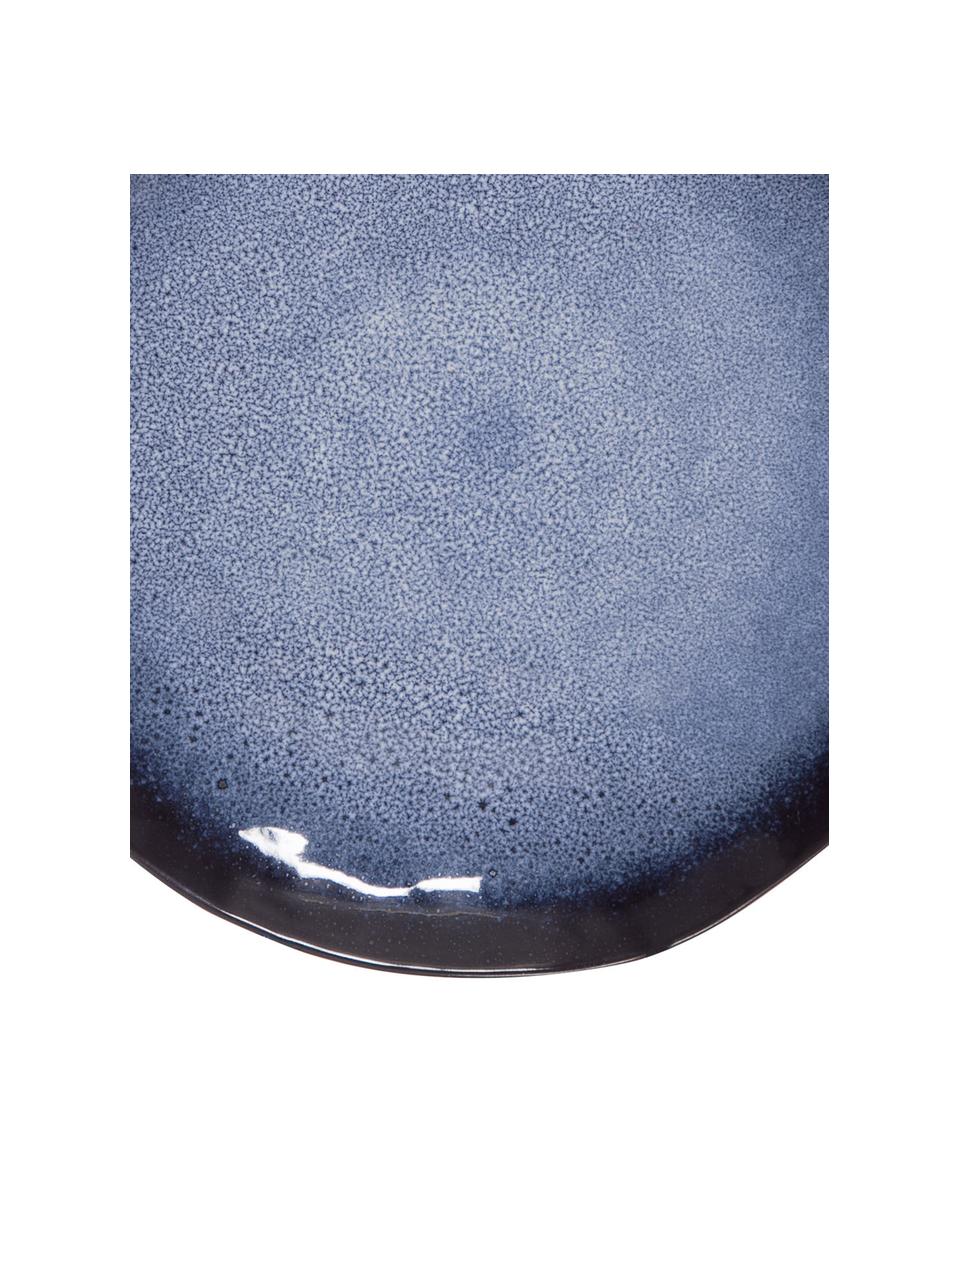 Dinerborden Sapphire, 3 stuks, Keramiek, Blauw, zwartbruin, Ø 27 cm